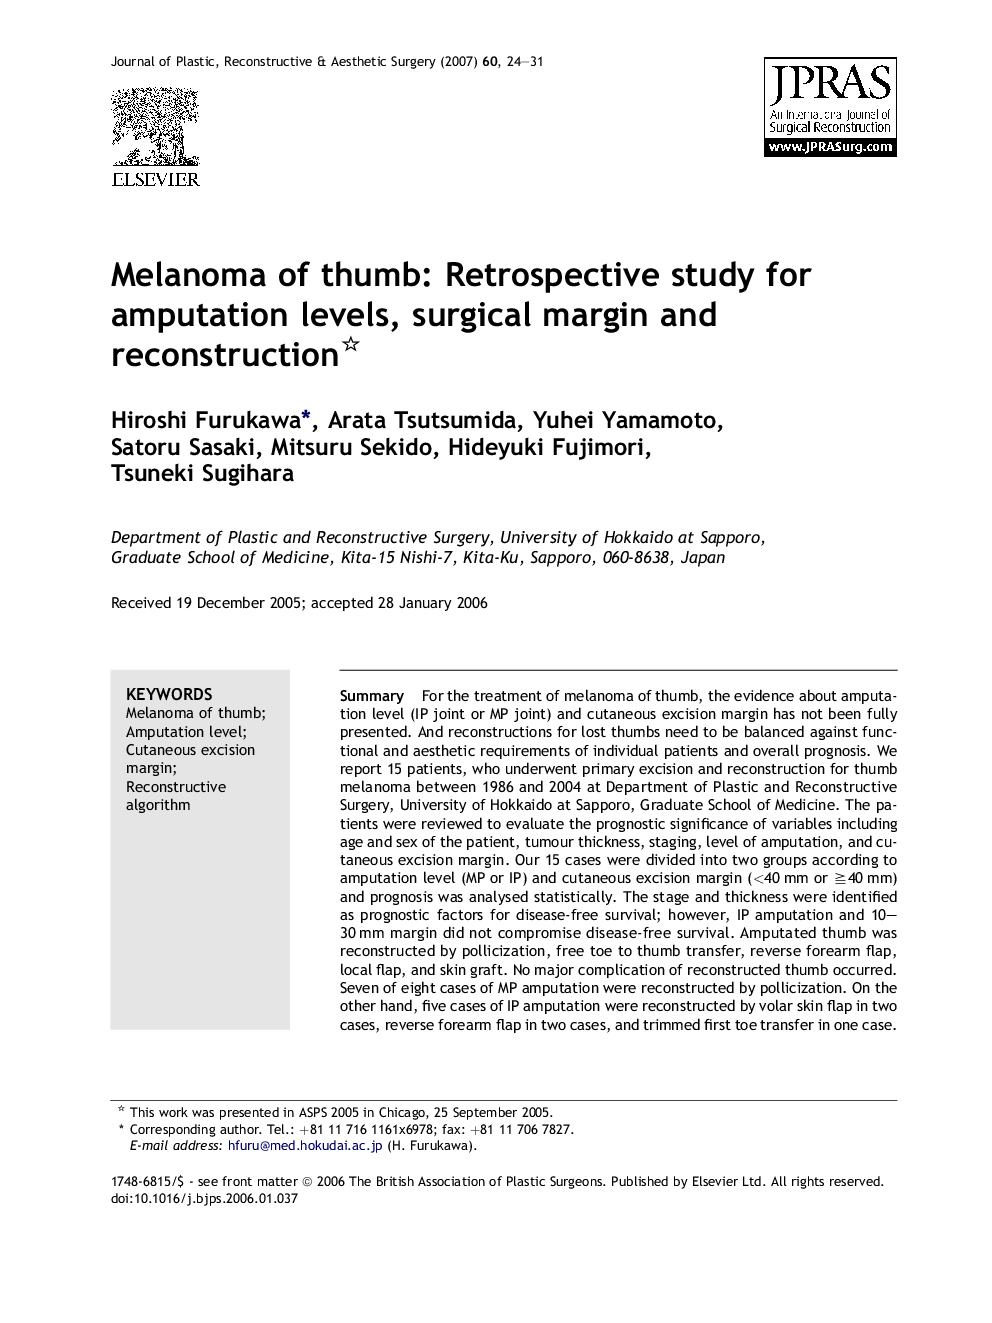 Melanoma of thumb: Retrospective study for amputation levels, surgical margin and reconstruction 